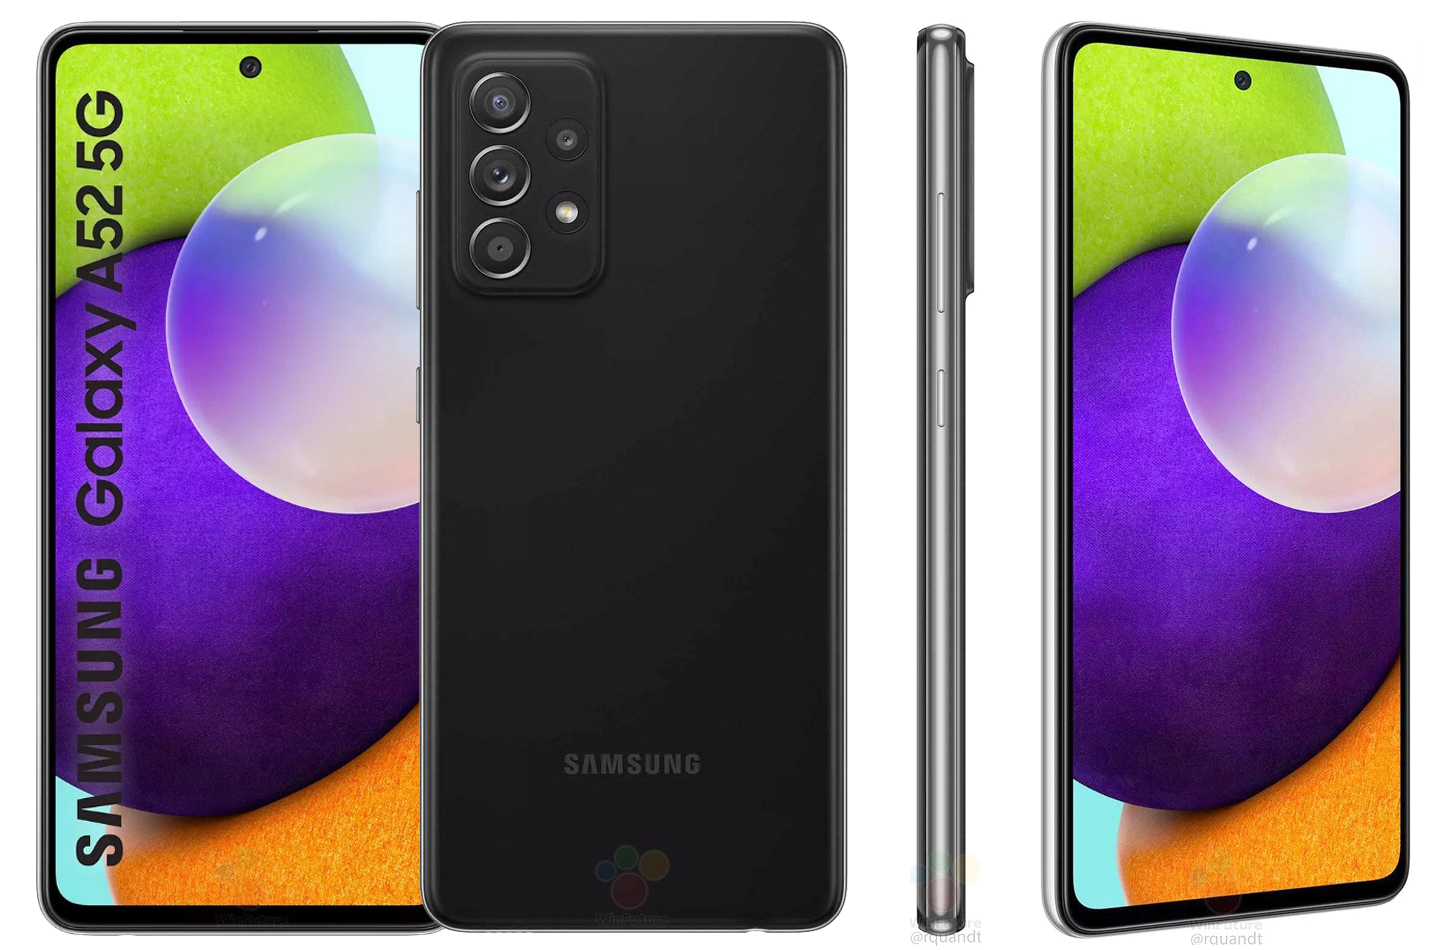 Samsung A52 phone with 5 cameras - Archyde